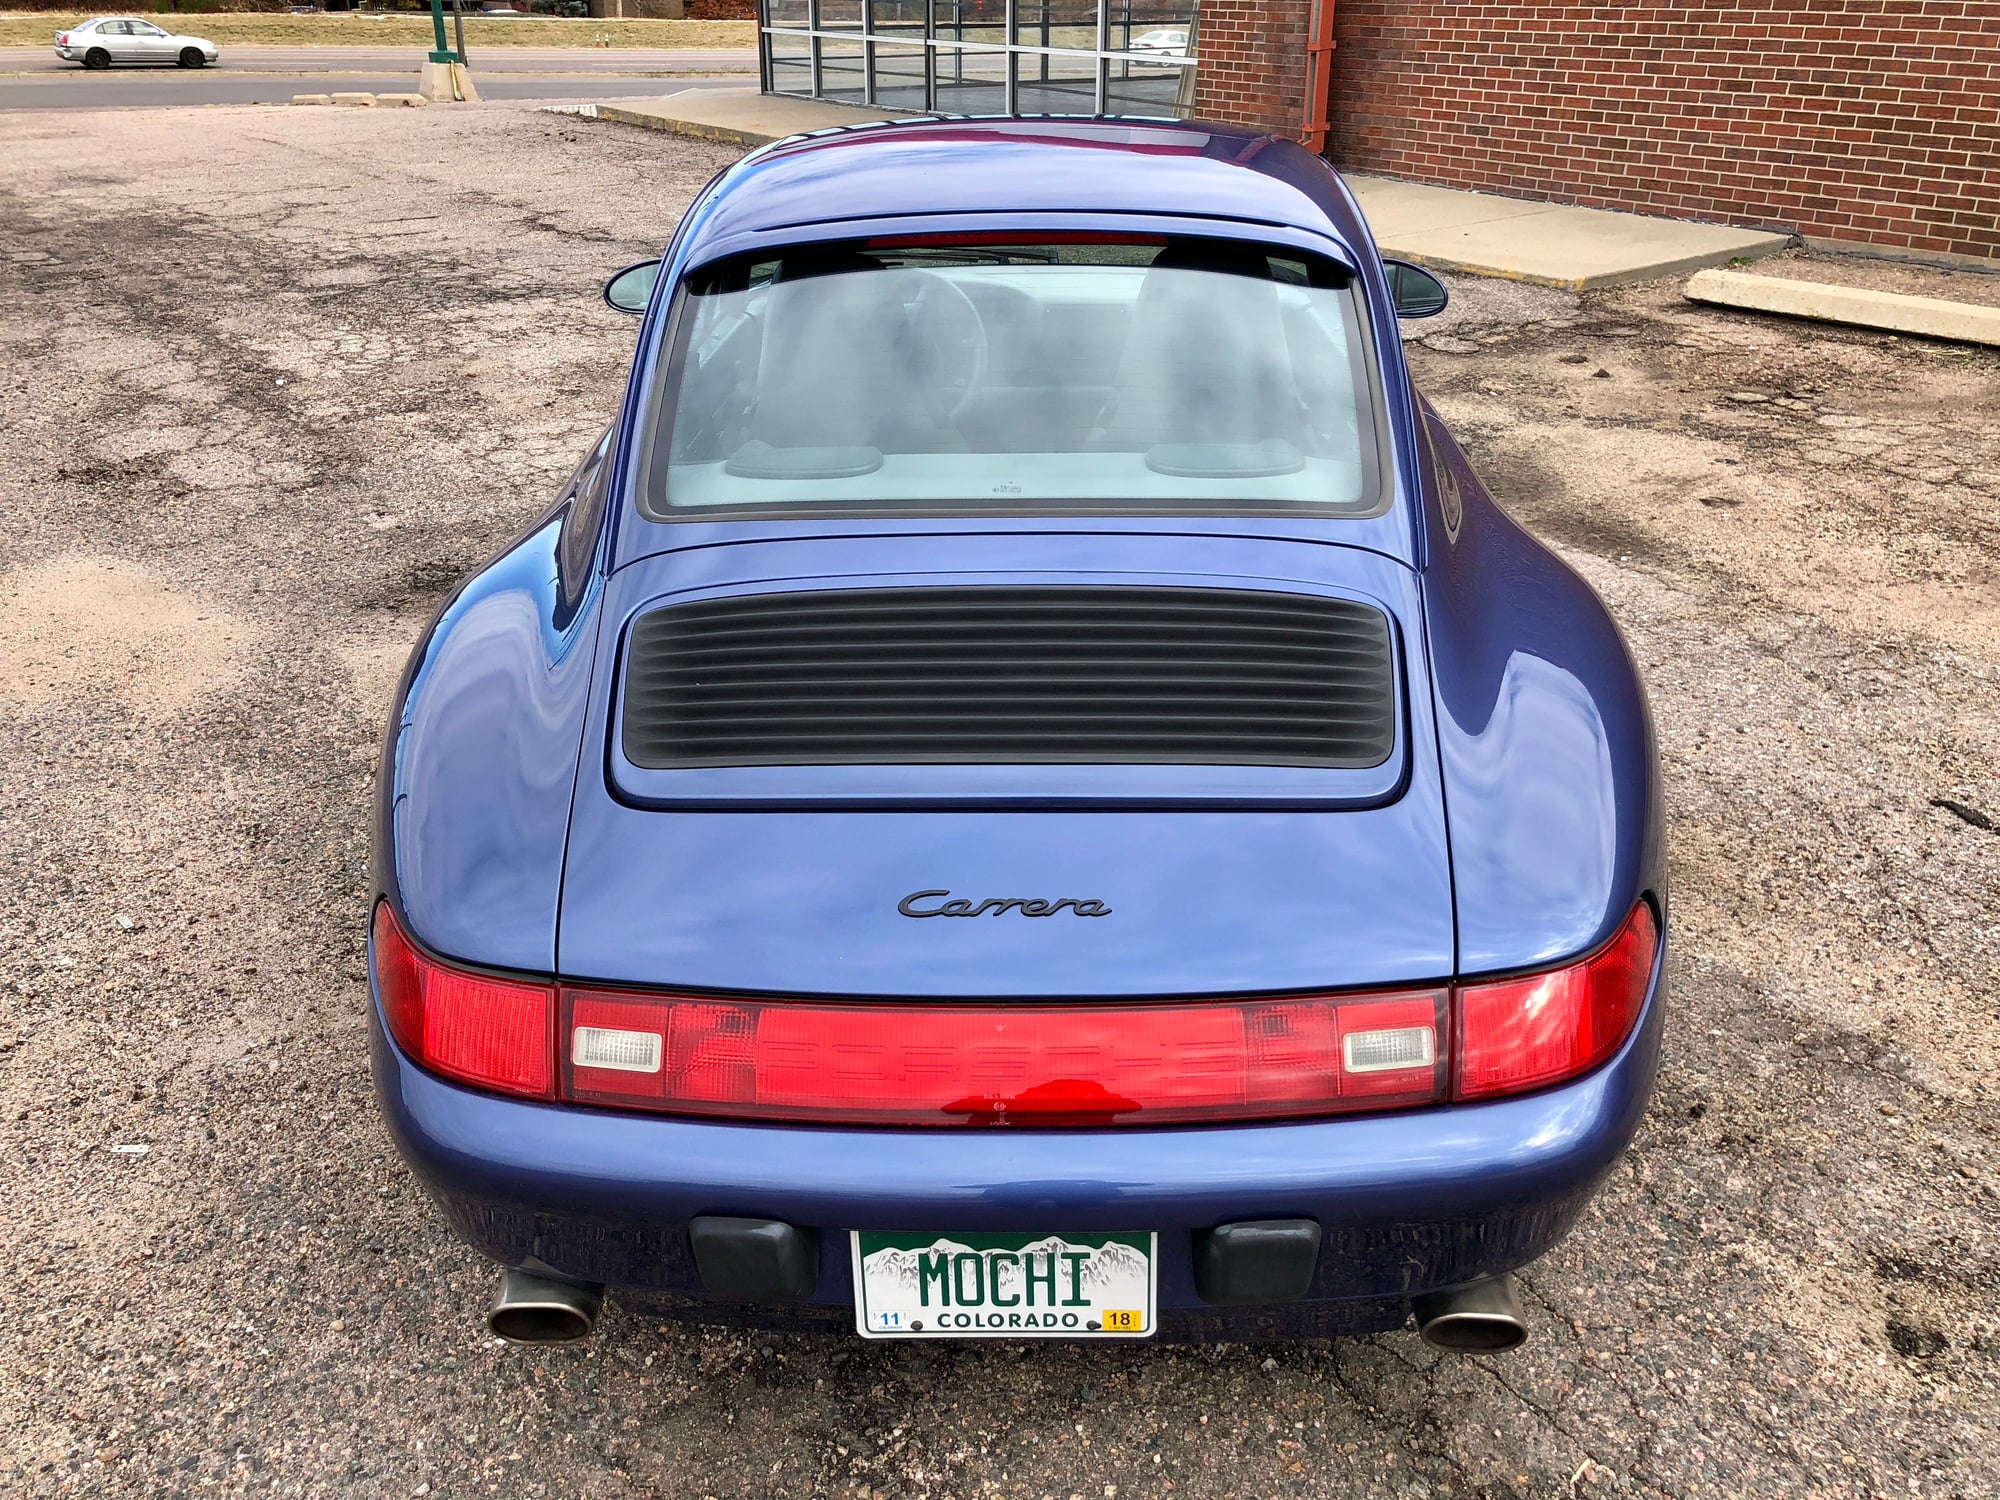 1997 Porsche 911 - Zenith Blue Porsche 993 - 911 Carrera - Used - VIN WP0AA2991VS321569 - 128,000 Miles - 6 cyl - 2WD - Manual - Coupe - Blue - Denver, CO 80228, United States